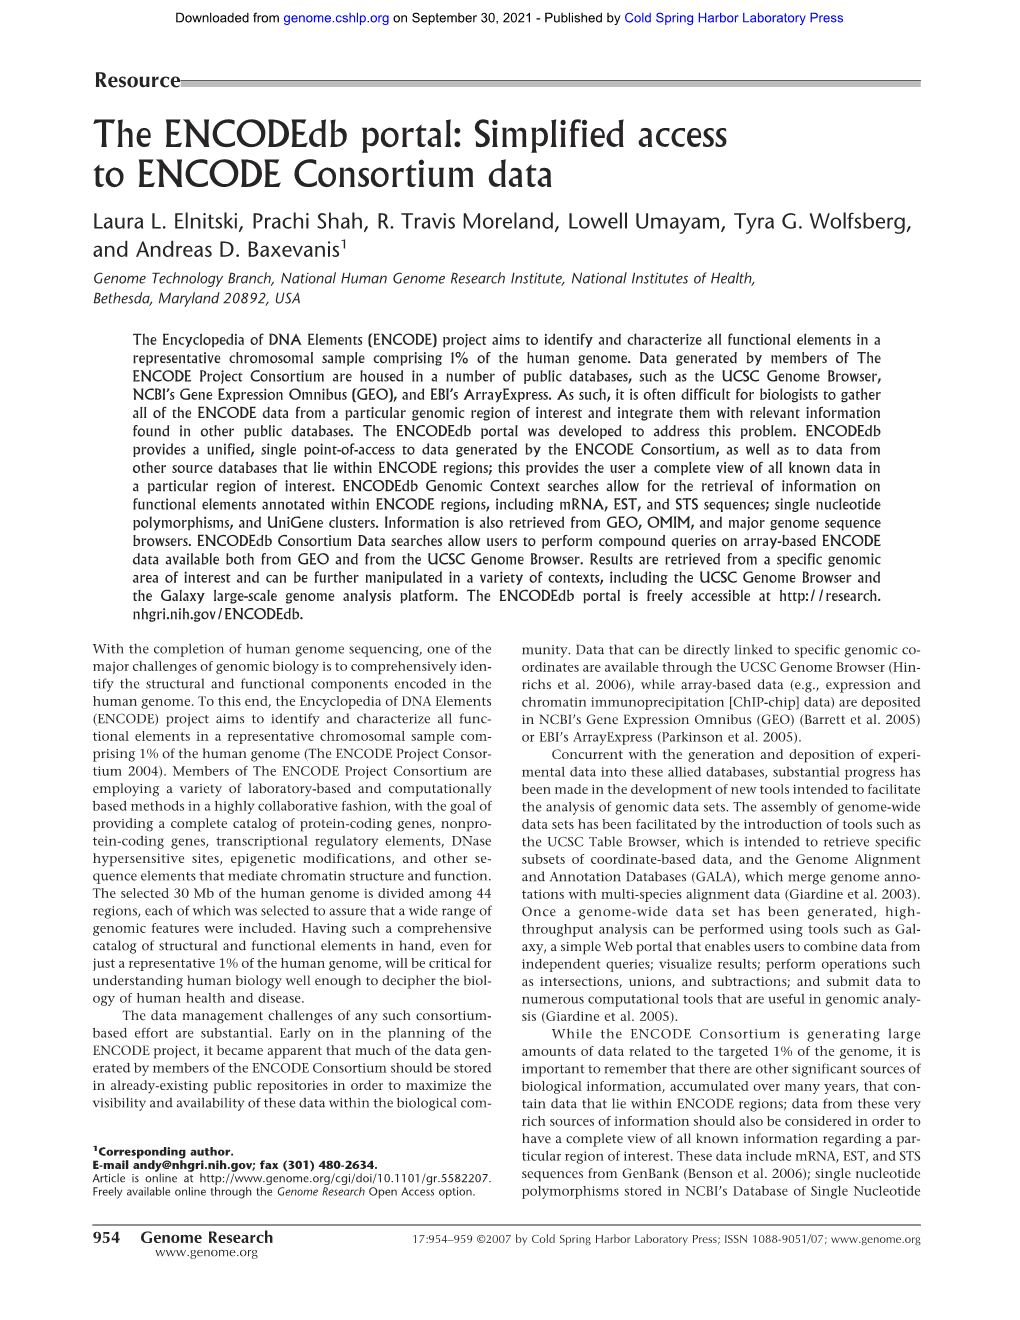 The Encodedb Portal: Simplified Access to ENCODE Consortium Data Laura L